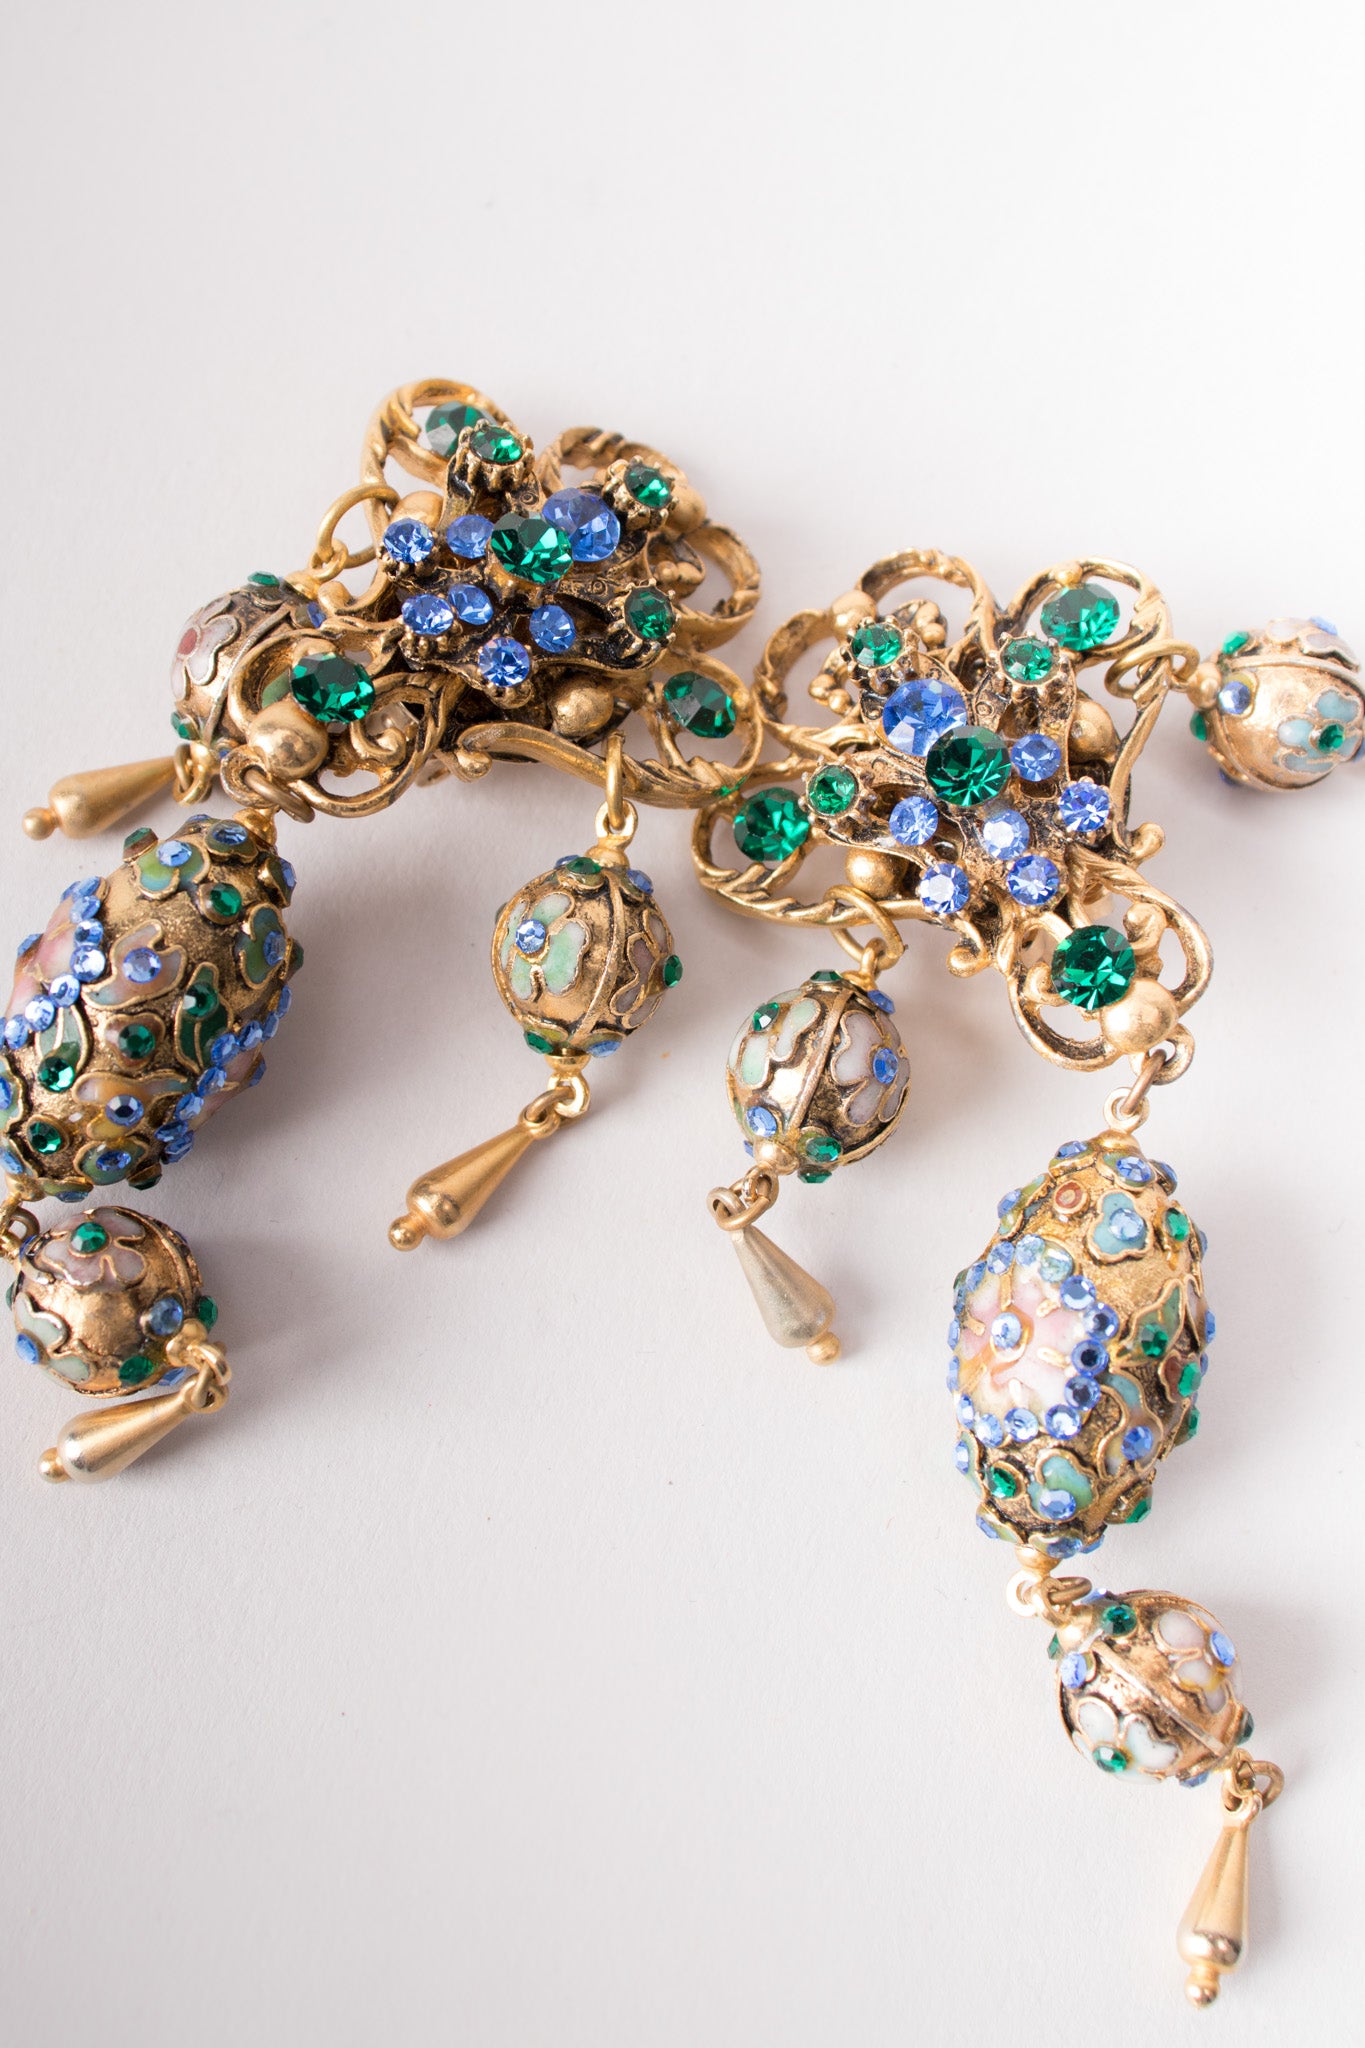 Cloisonne Faberge Jeweled Egg Chandelier Earrings